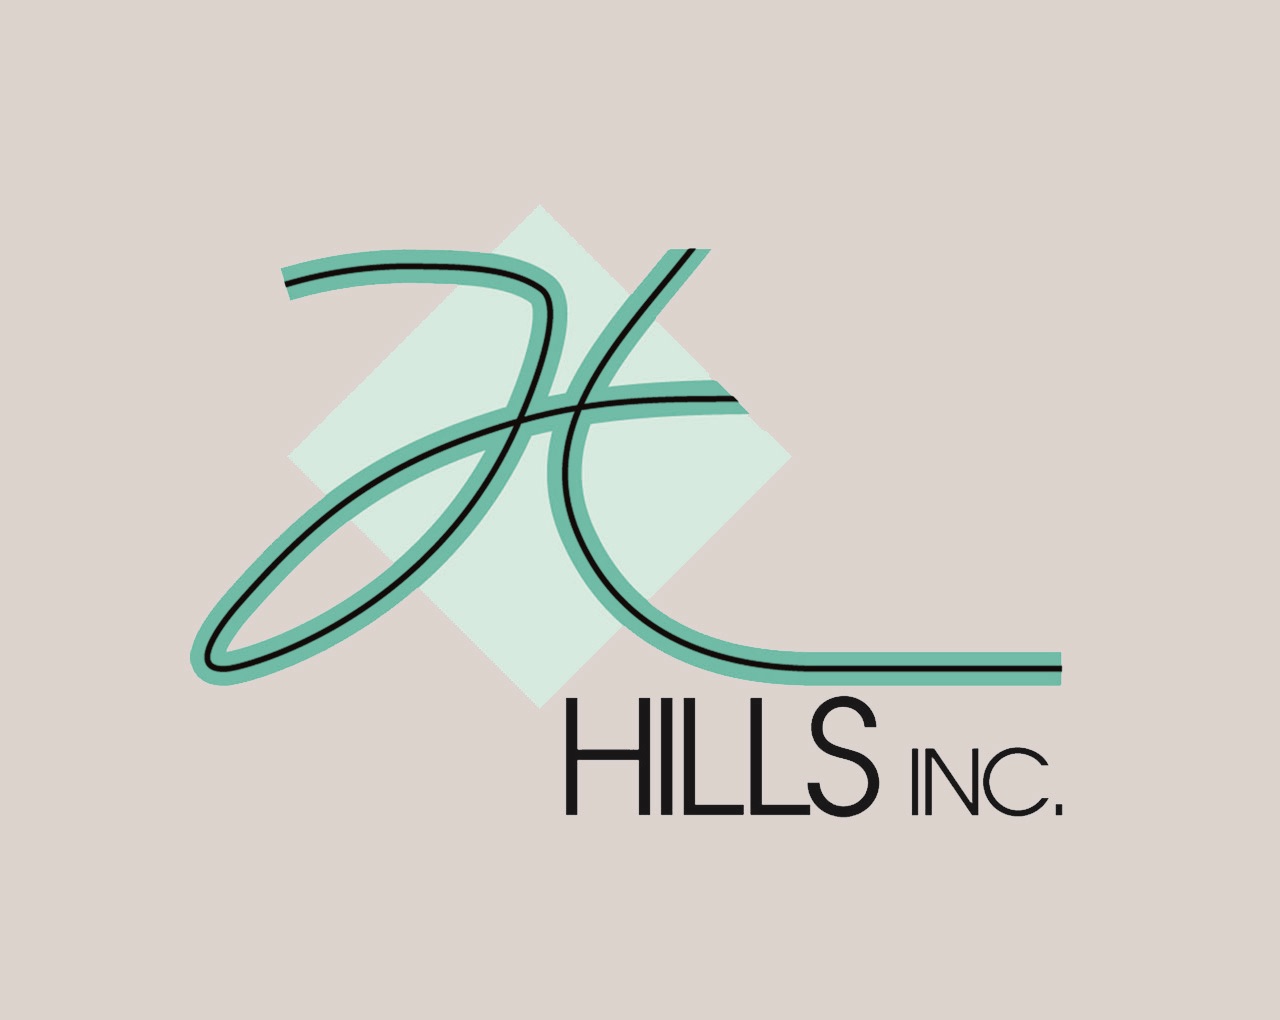 Hills, Inc. Logo